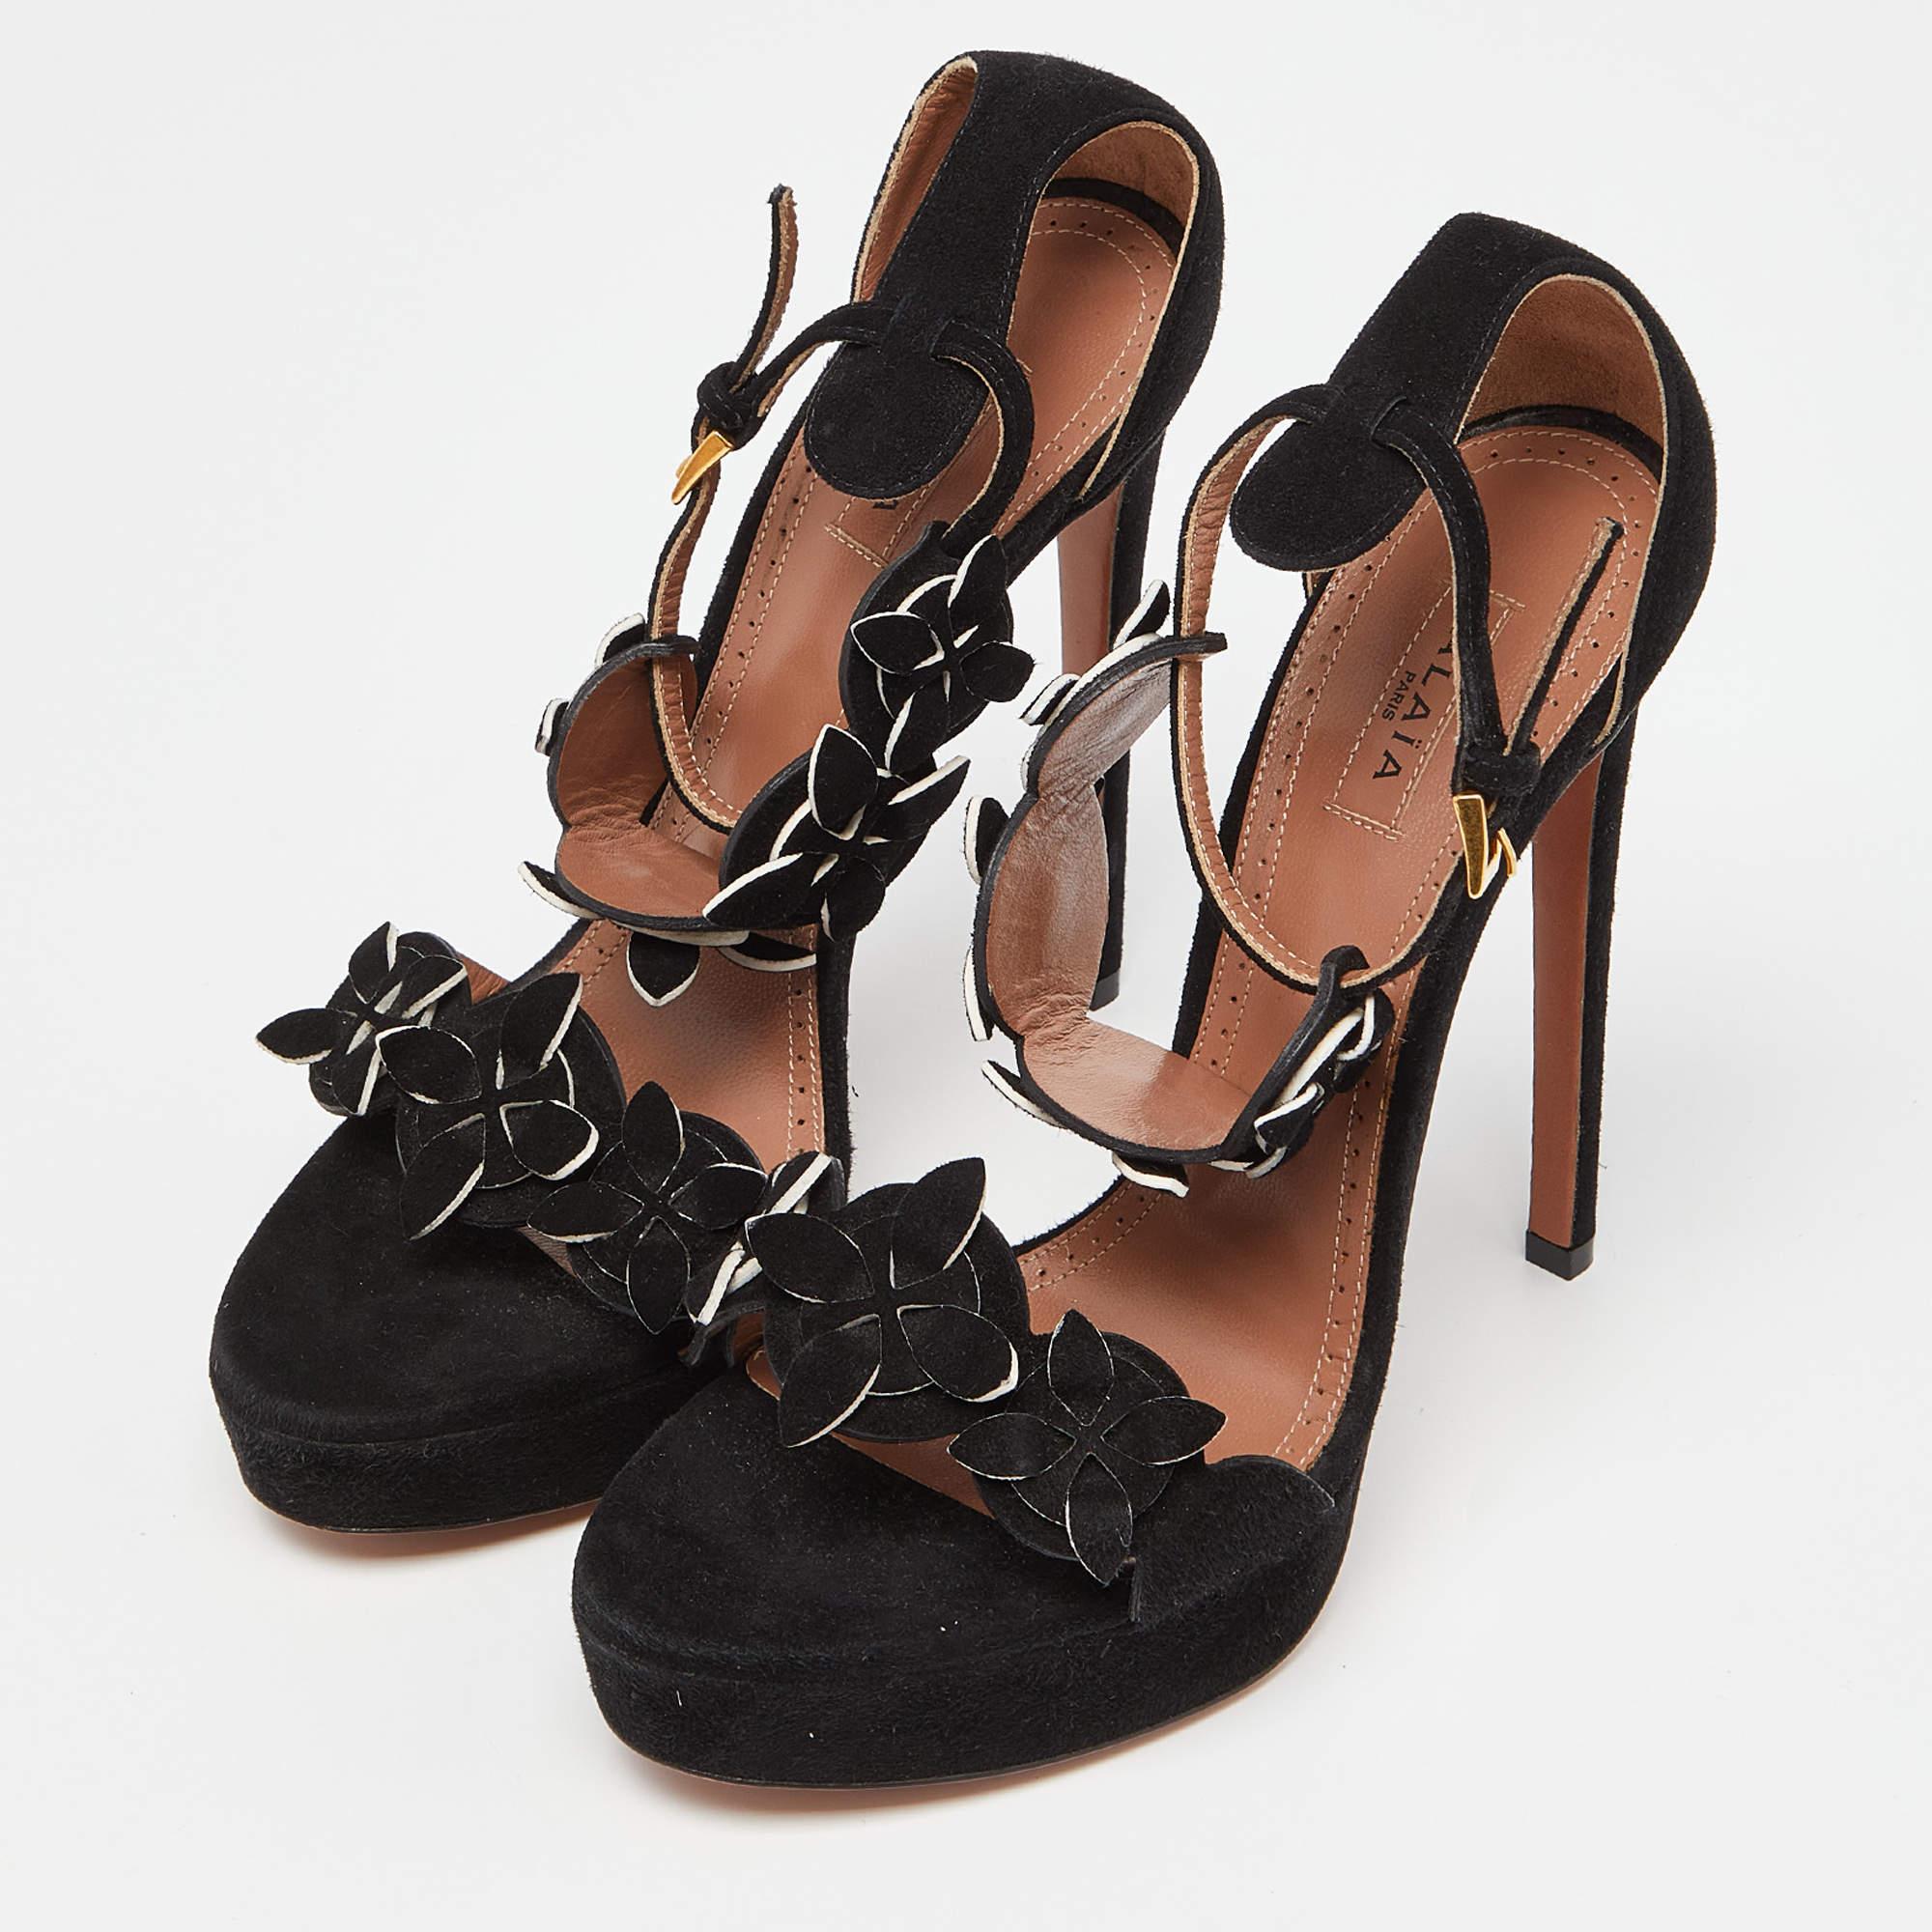 Alaia Black Suede Platform Ankle Strap Sandals Size 38 For Sale 1